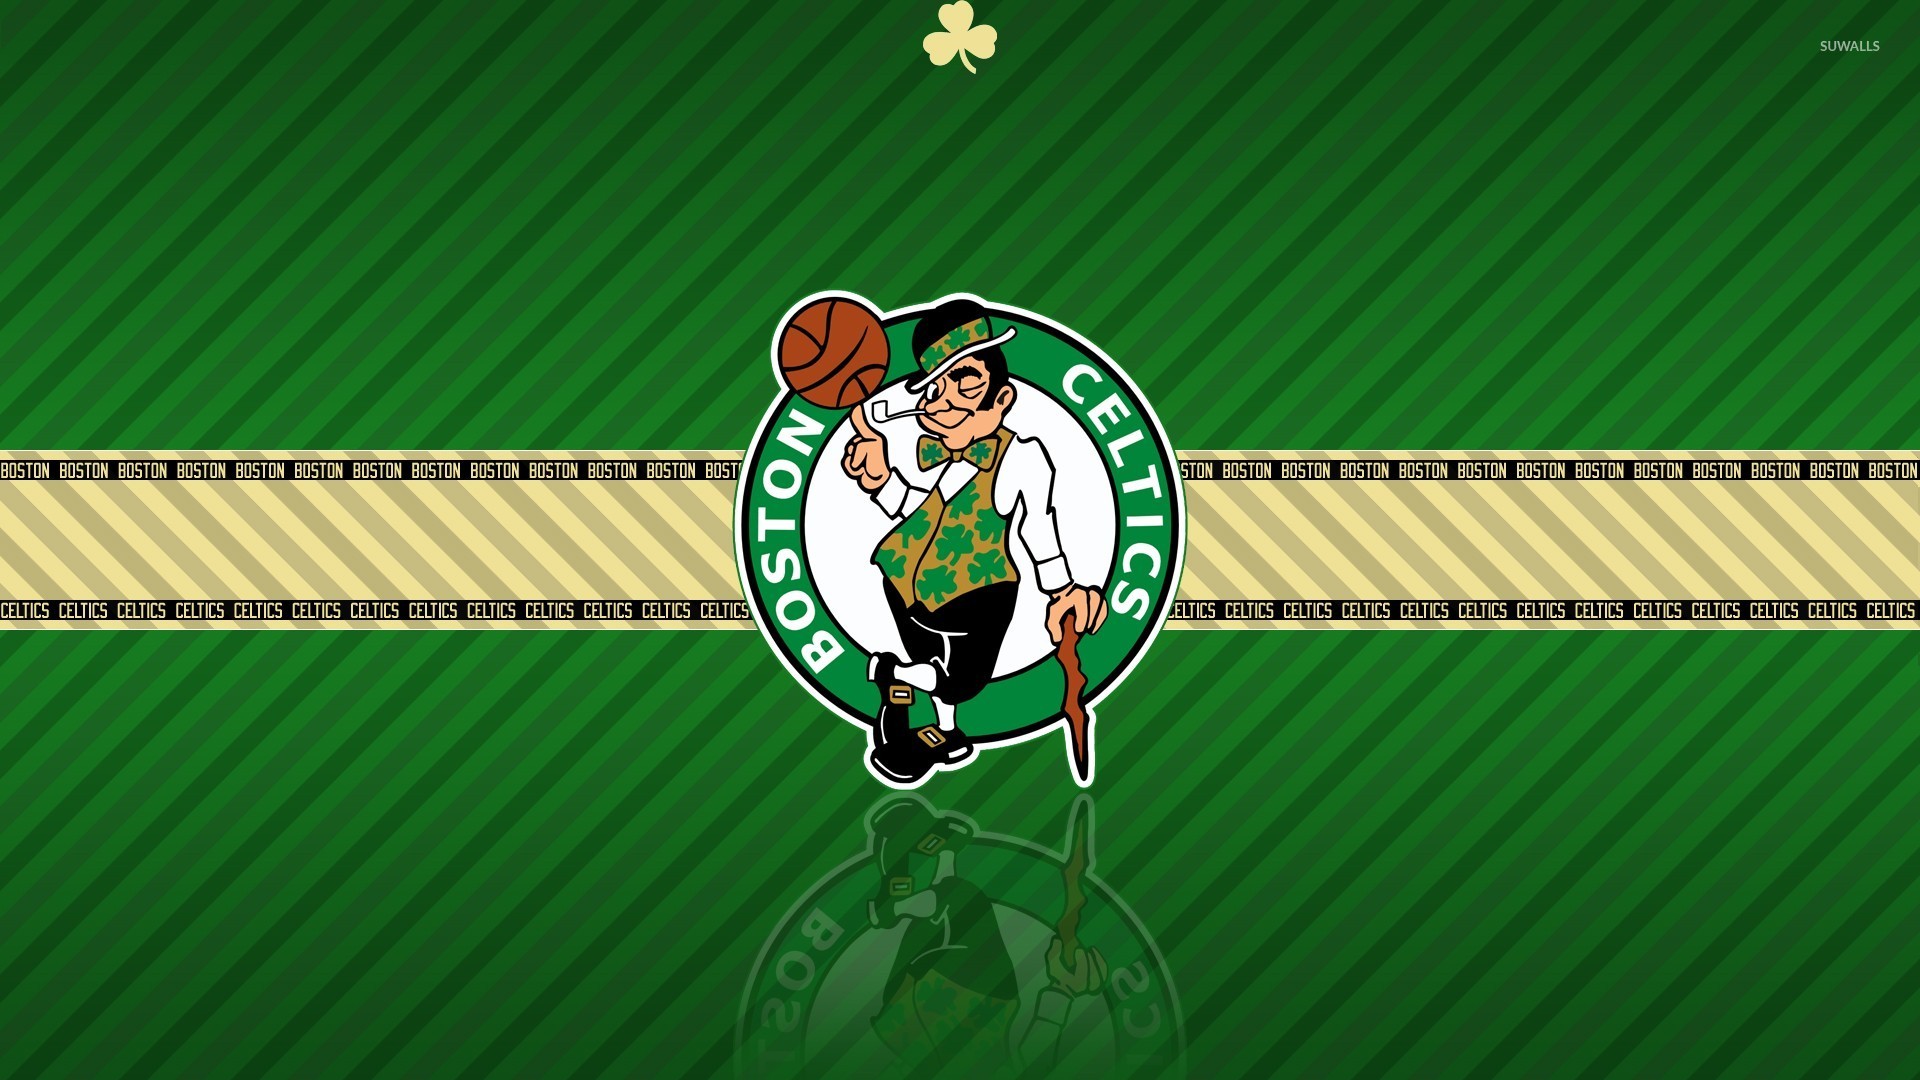 Boston Celtics Images  Photos, videos, logos, illustrations and